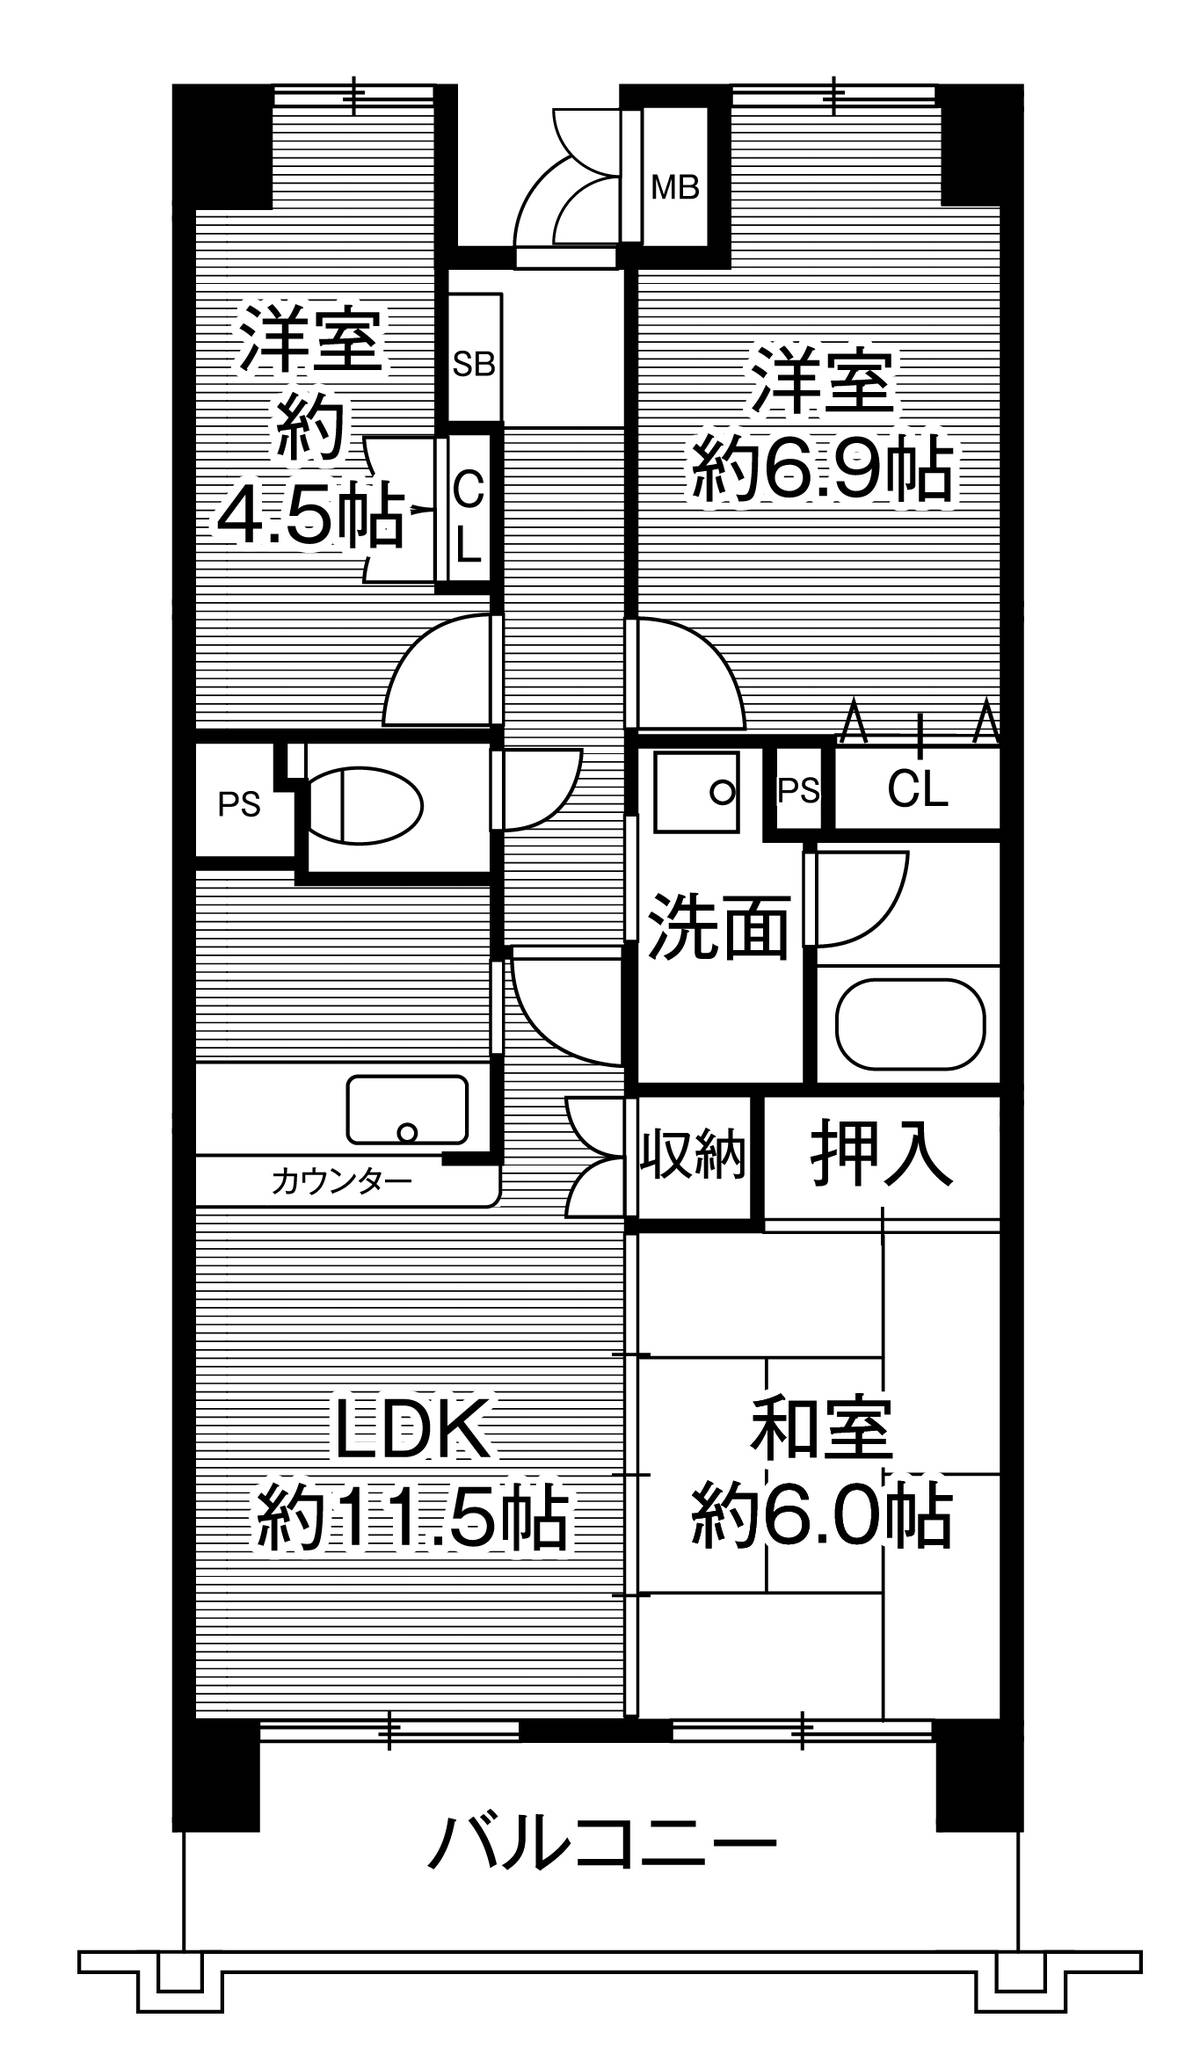 3DK floorplan of Village House Kyougamine Tower in Toyota-shi